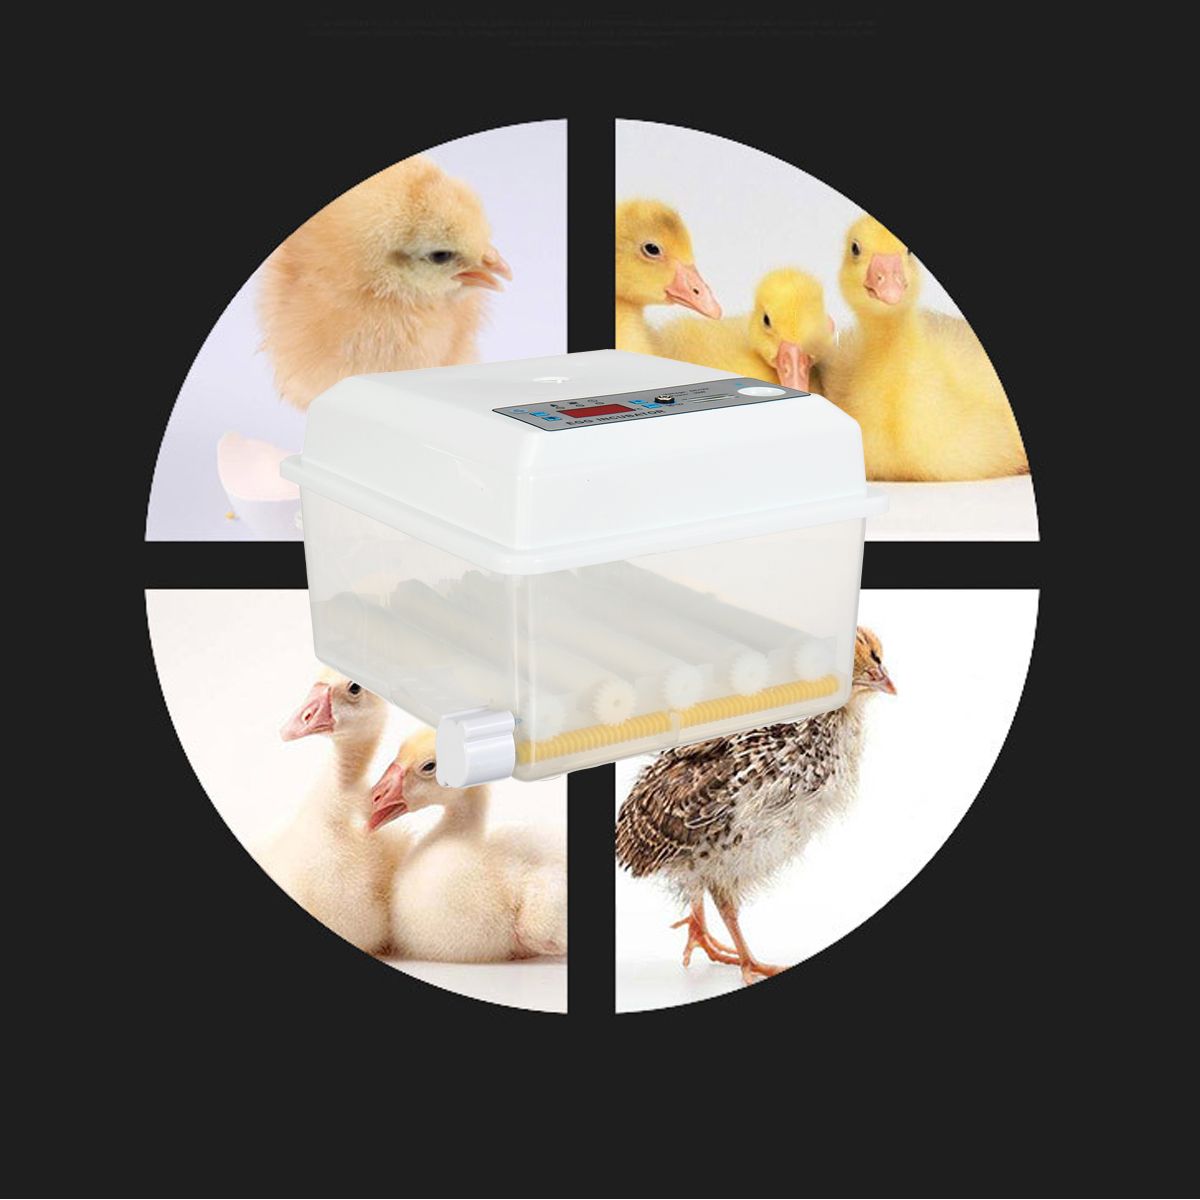 16-Eggs-Egg-Incubator-Fully-Automatic-Incubators-Intelligent-Temperature-Control-Chicken-Duck-Goose--1716426